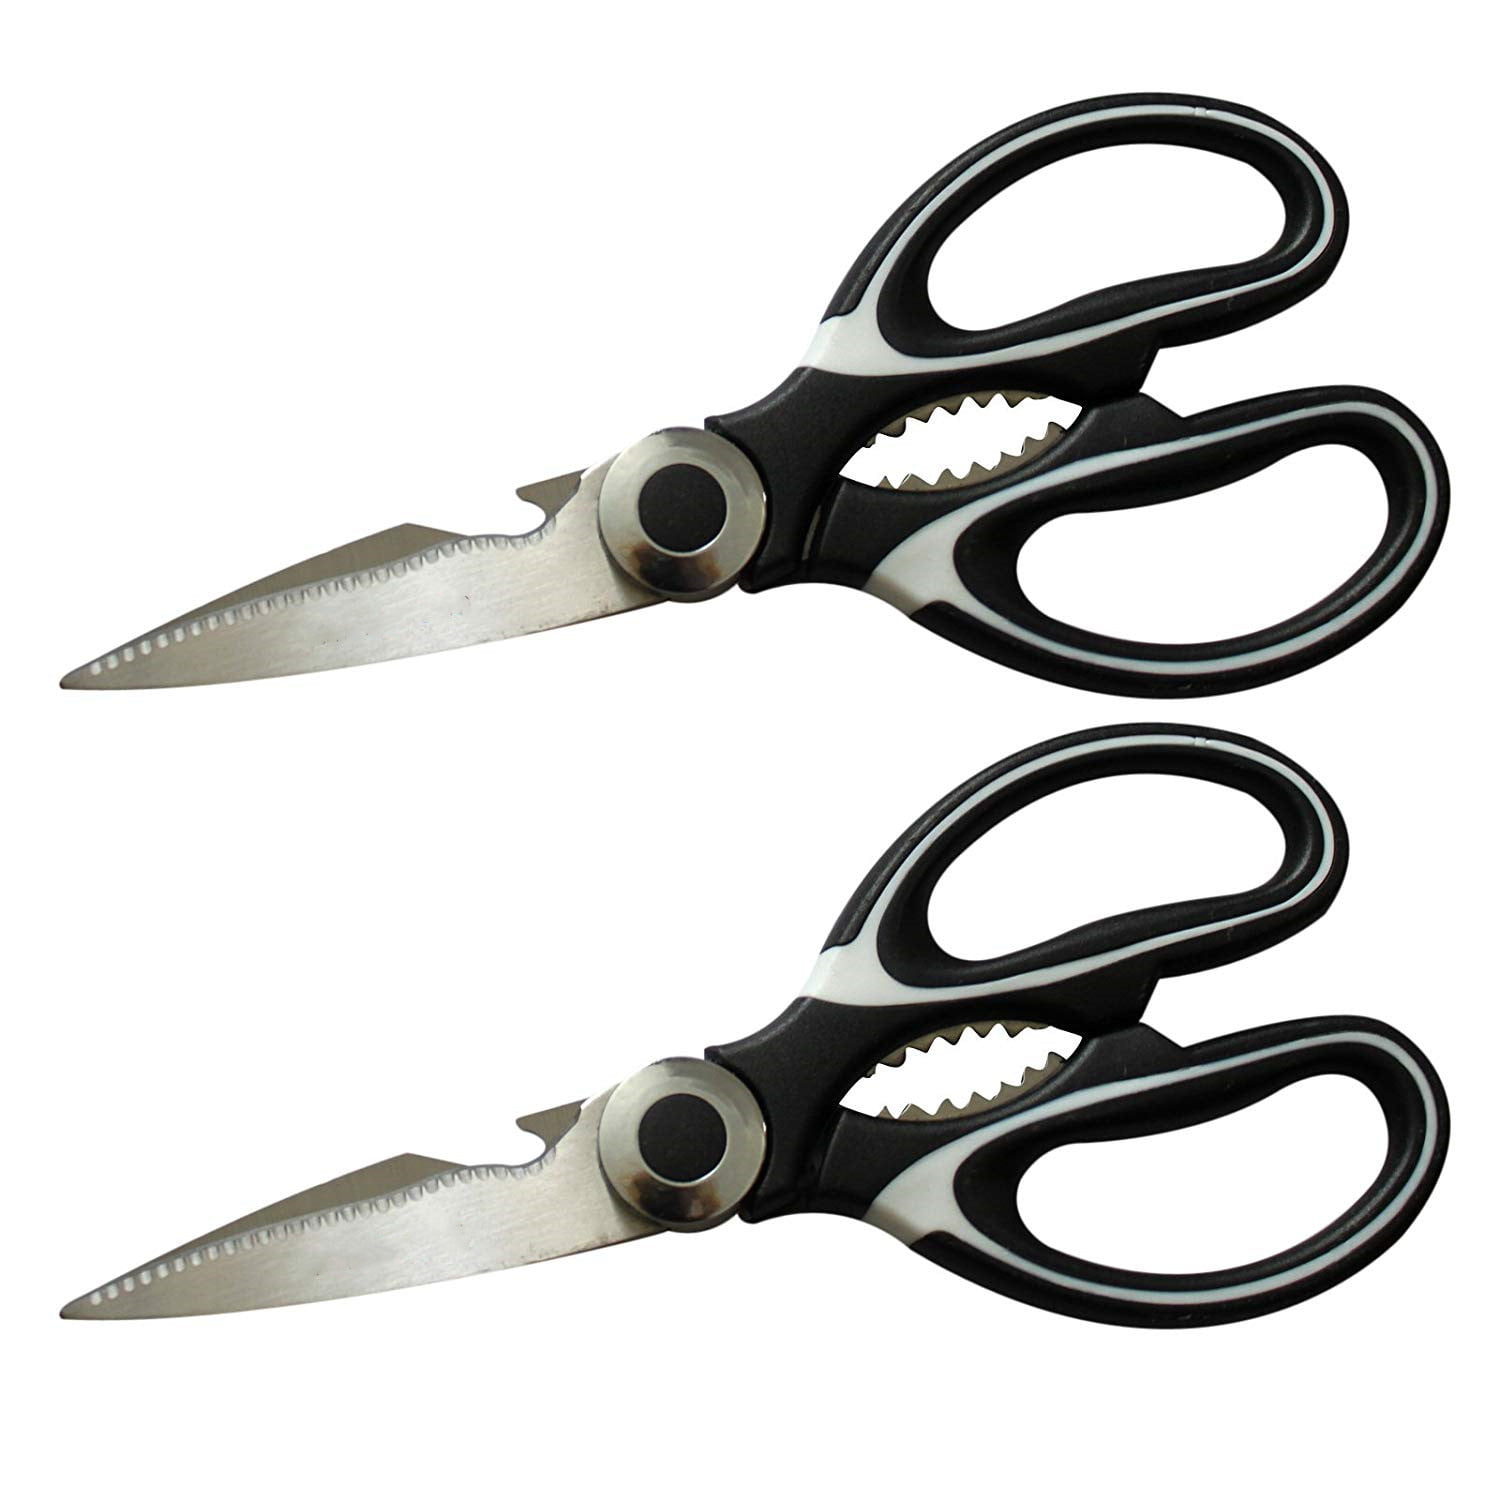 Oxo Kitchen Herb Scissors Strip Stainless Steel Separating Blades Cushion Grip 